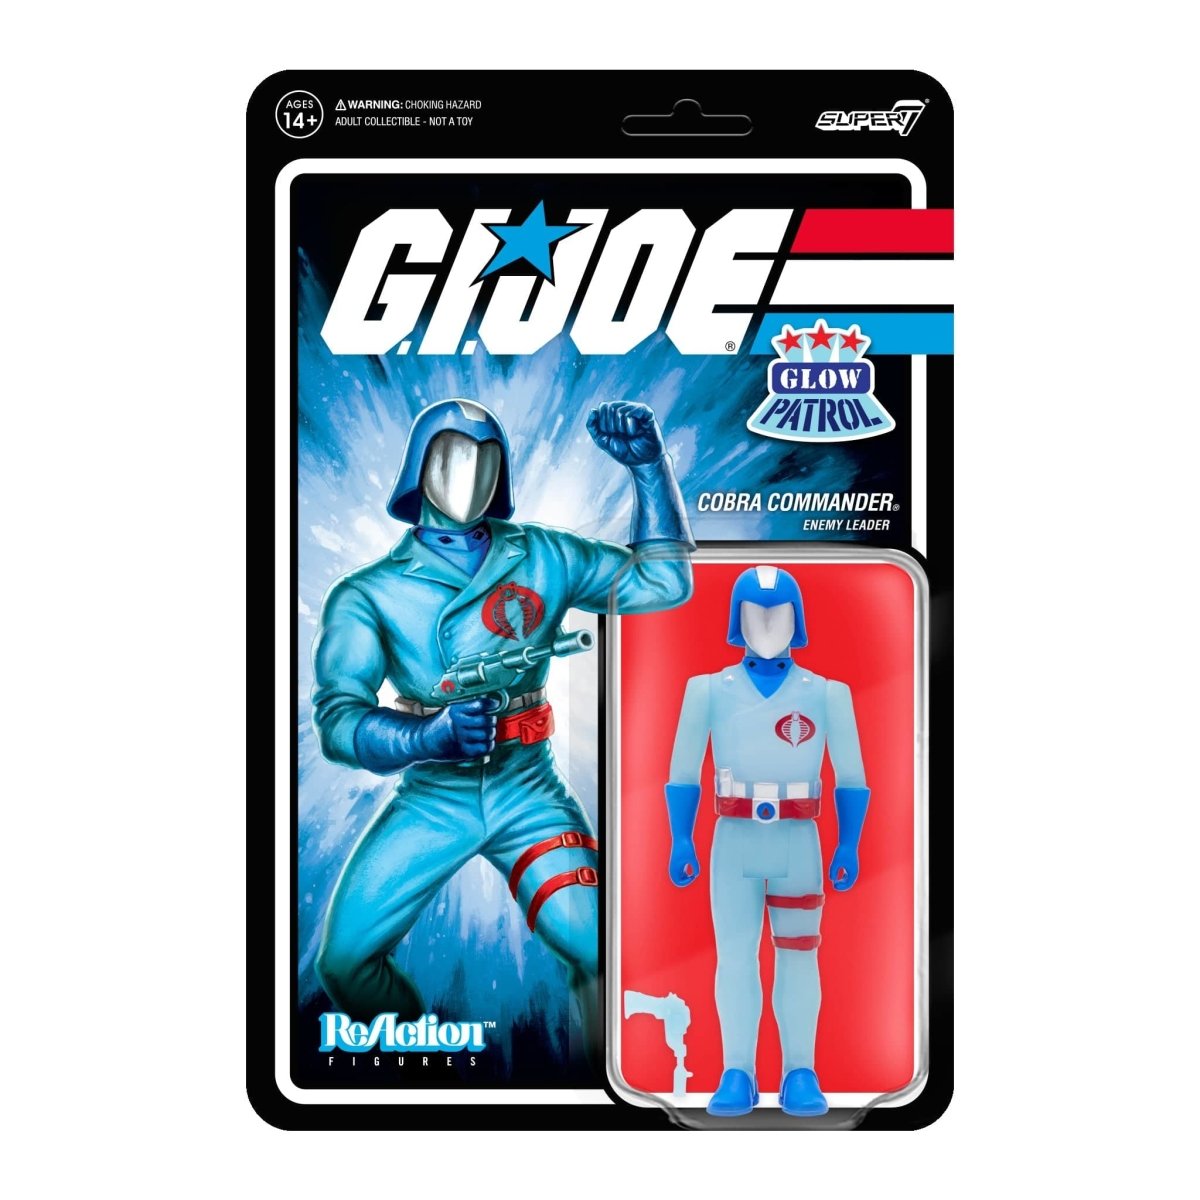 G.I. Joe ReAction Figures Cobra Commander (Glow Patrol) Wave 1b Exclusive Pop-O-Loco